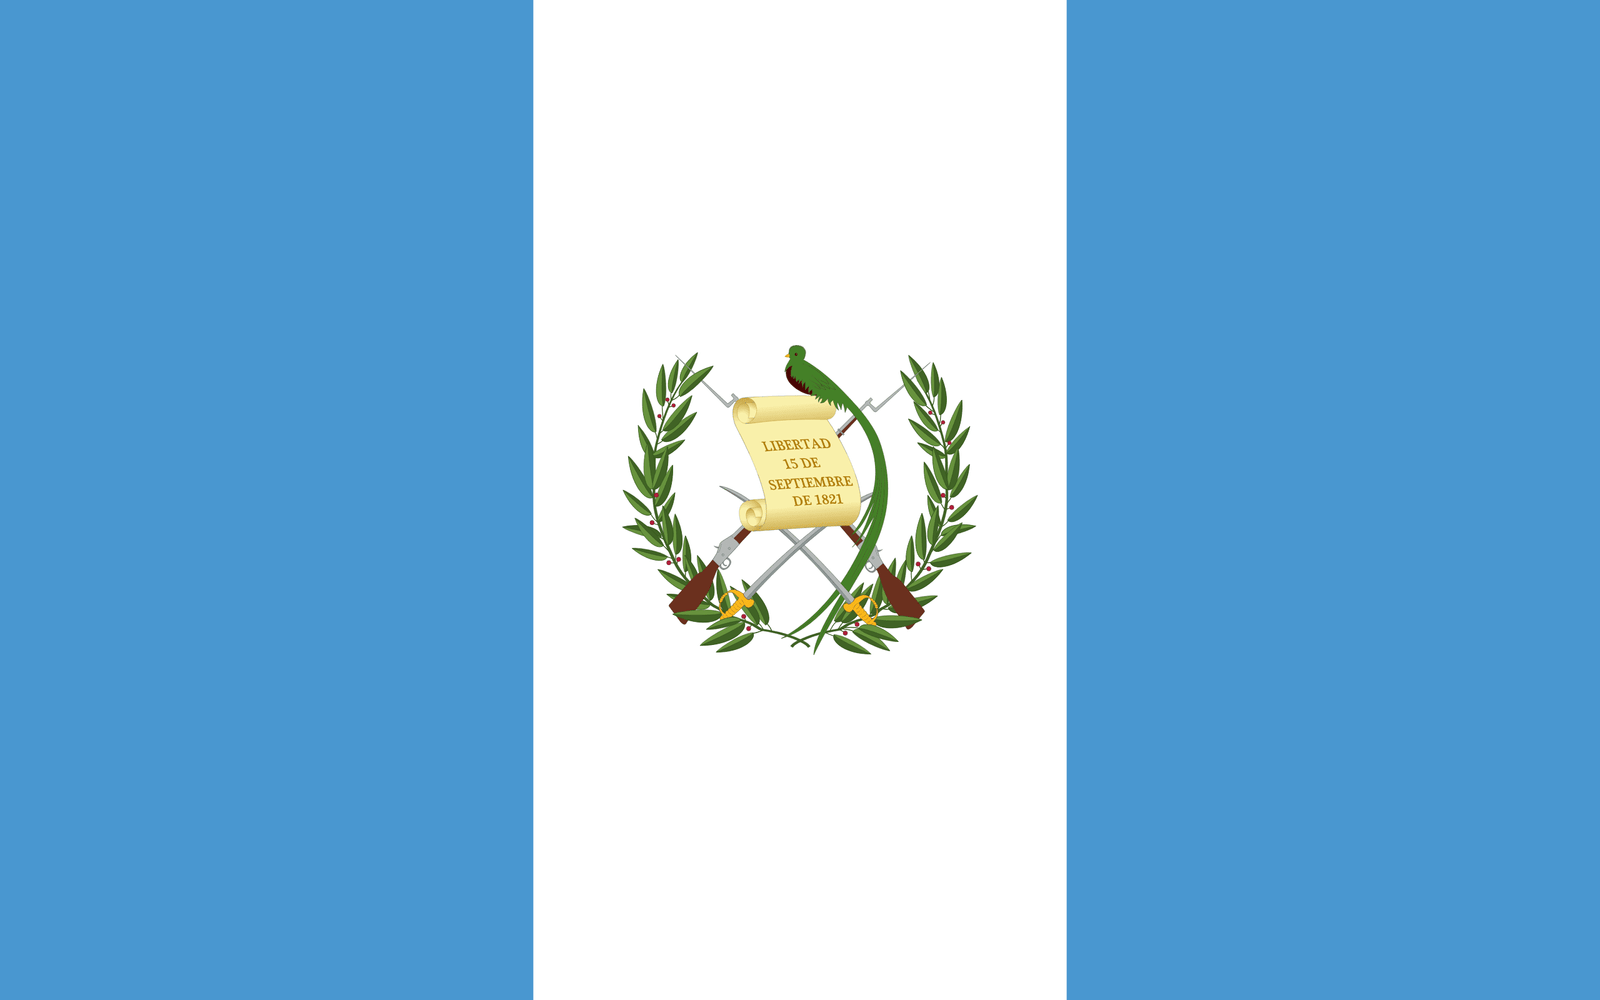 Guatemala - Powered by Eduhyme.com